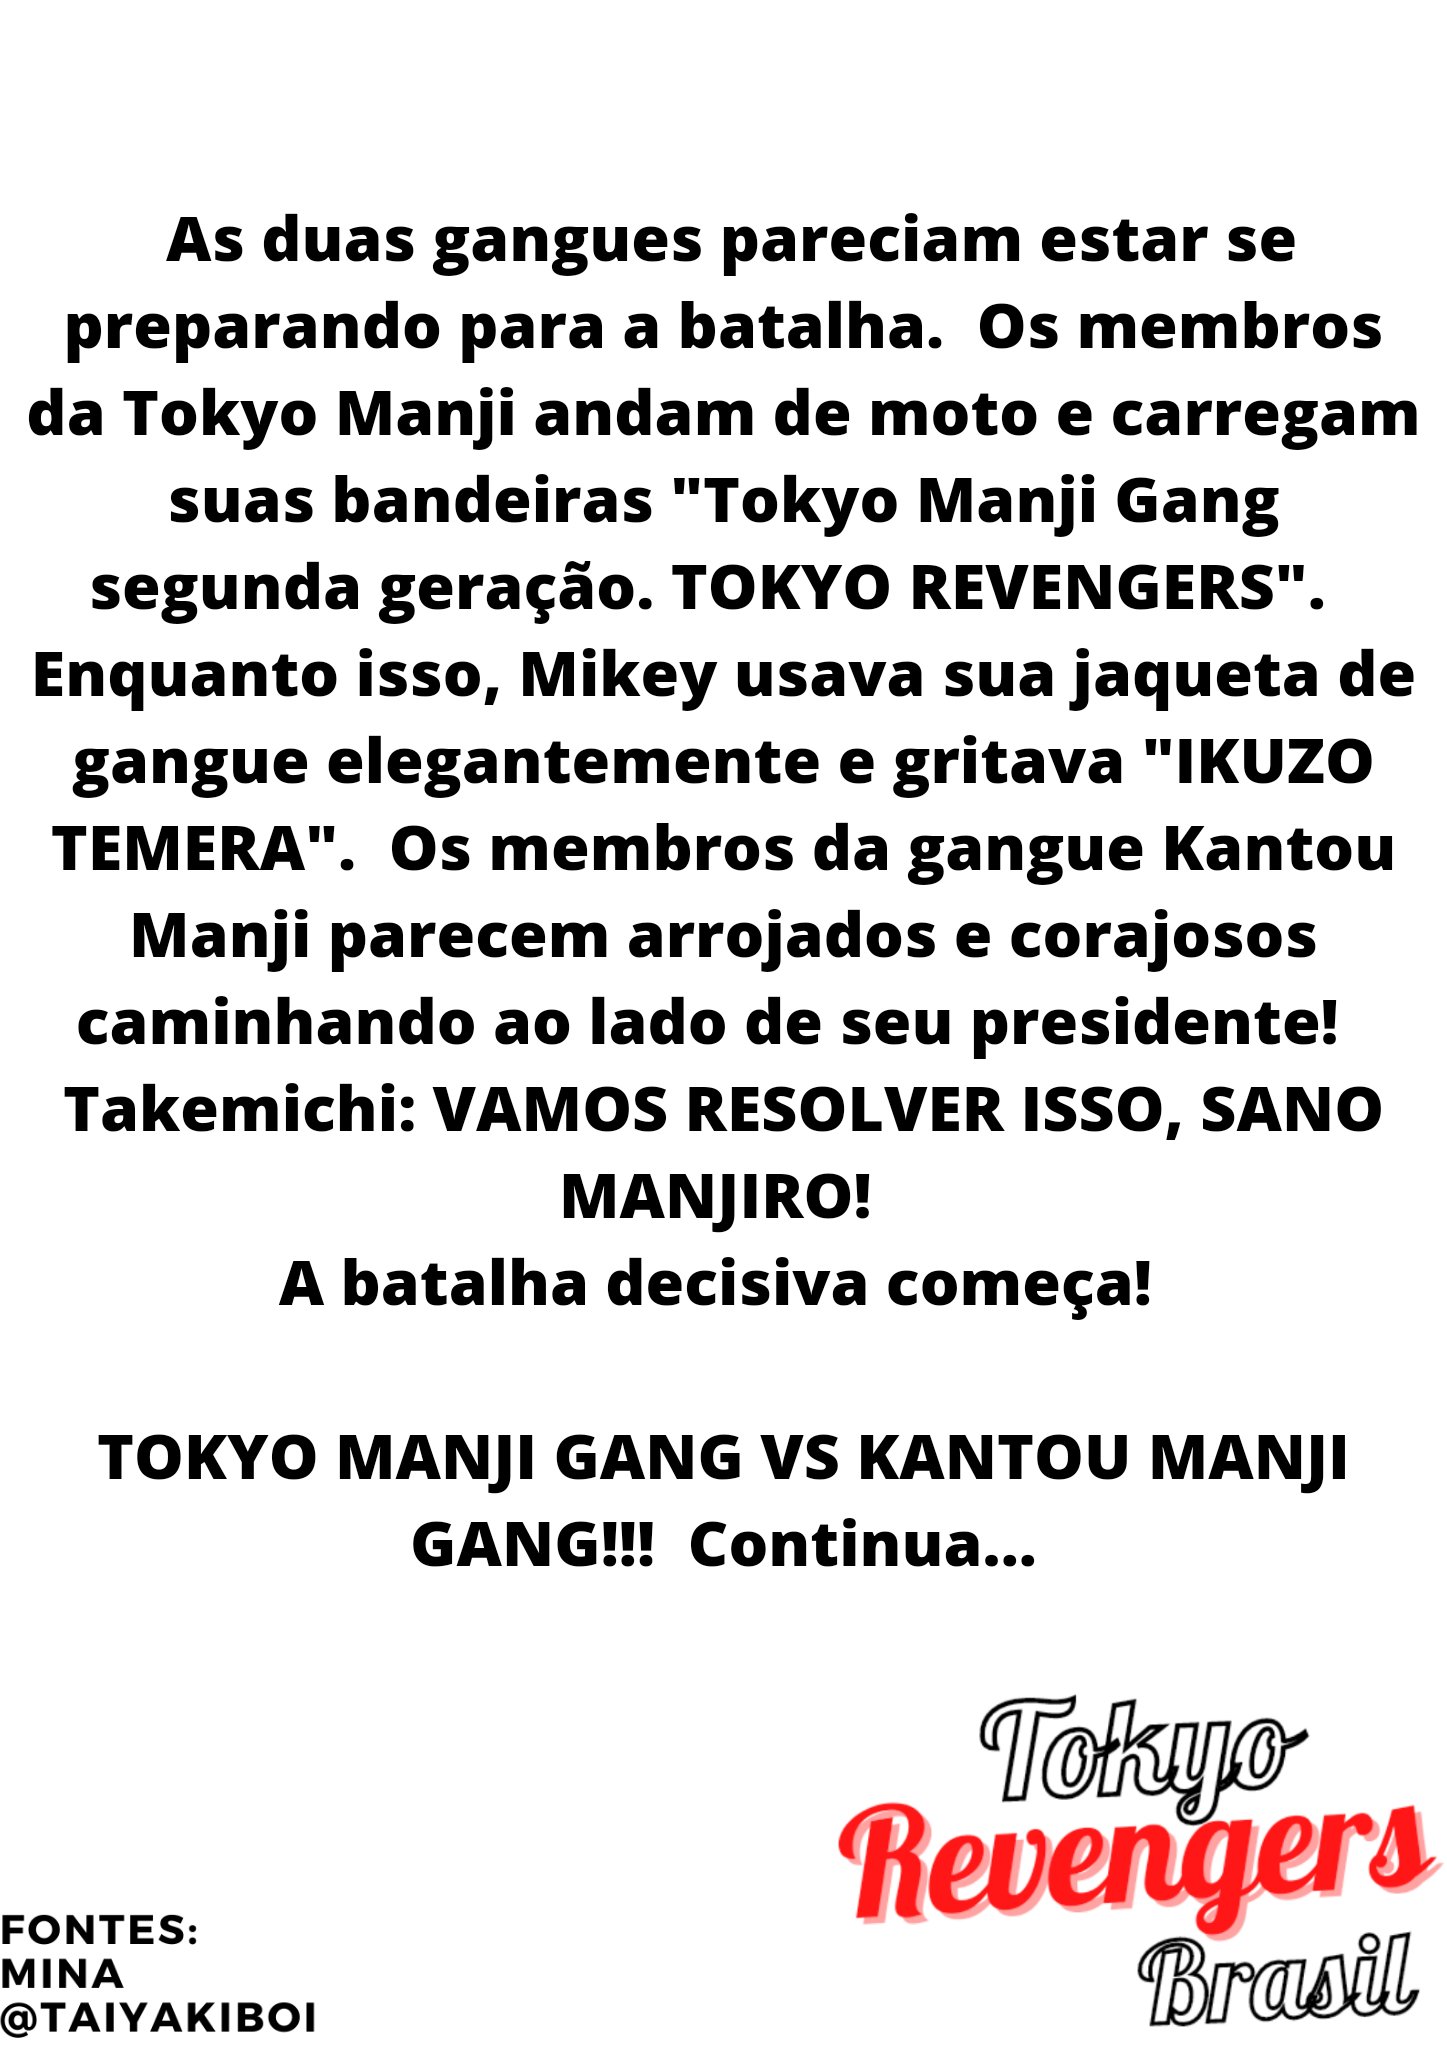 Tokyo Revengers Brasil on X: 🚨 NOTA OFICIAL TRADUZIDA! Cr: @NerivanKazuto  muito obrigada!  / X